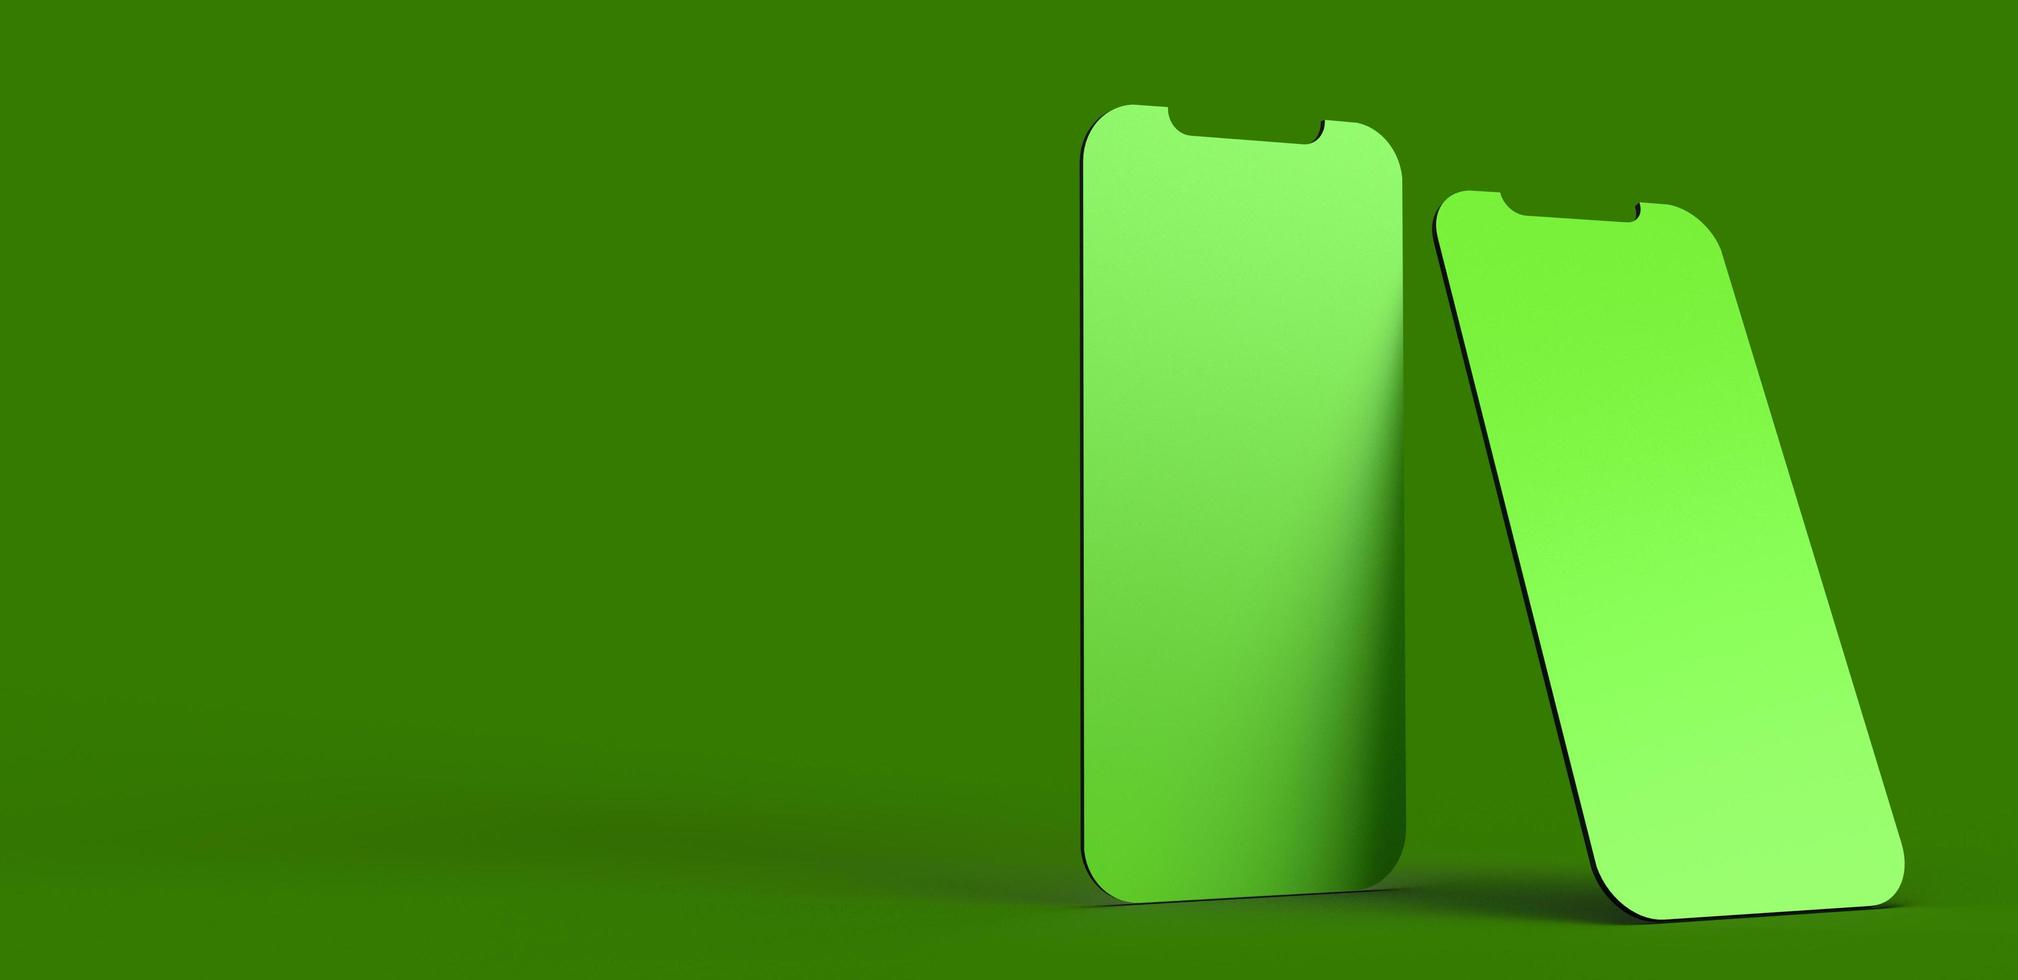 grün dunkel farbe smartphone tablet mobil touchscreen objekt mockup leer hintergrund tapete kopie raum kreativ grafikdesign business technologie elektronisch digital online display.3d render foto